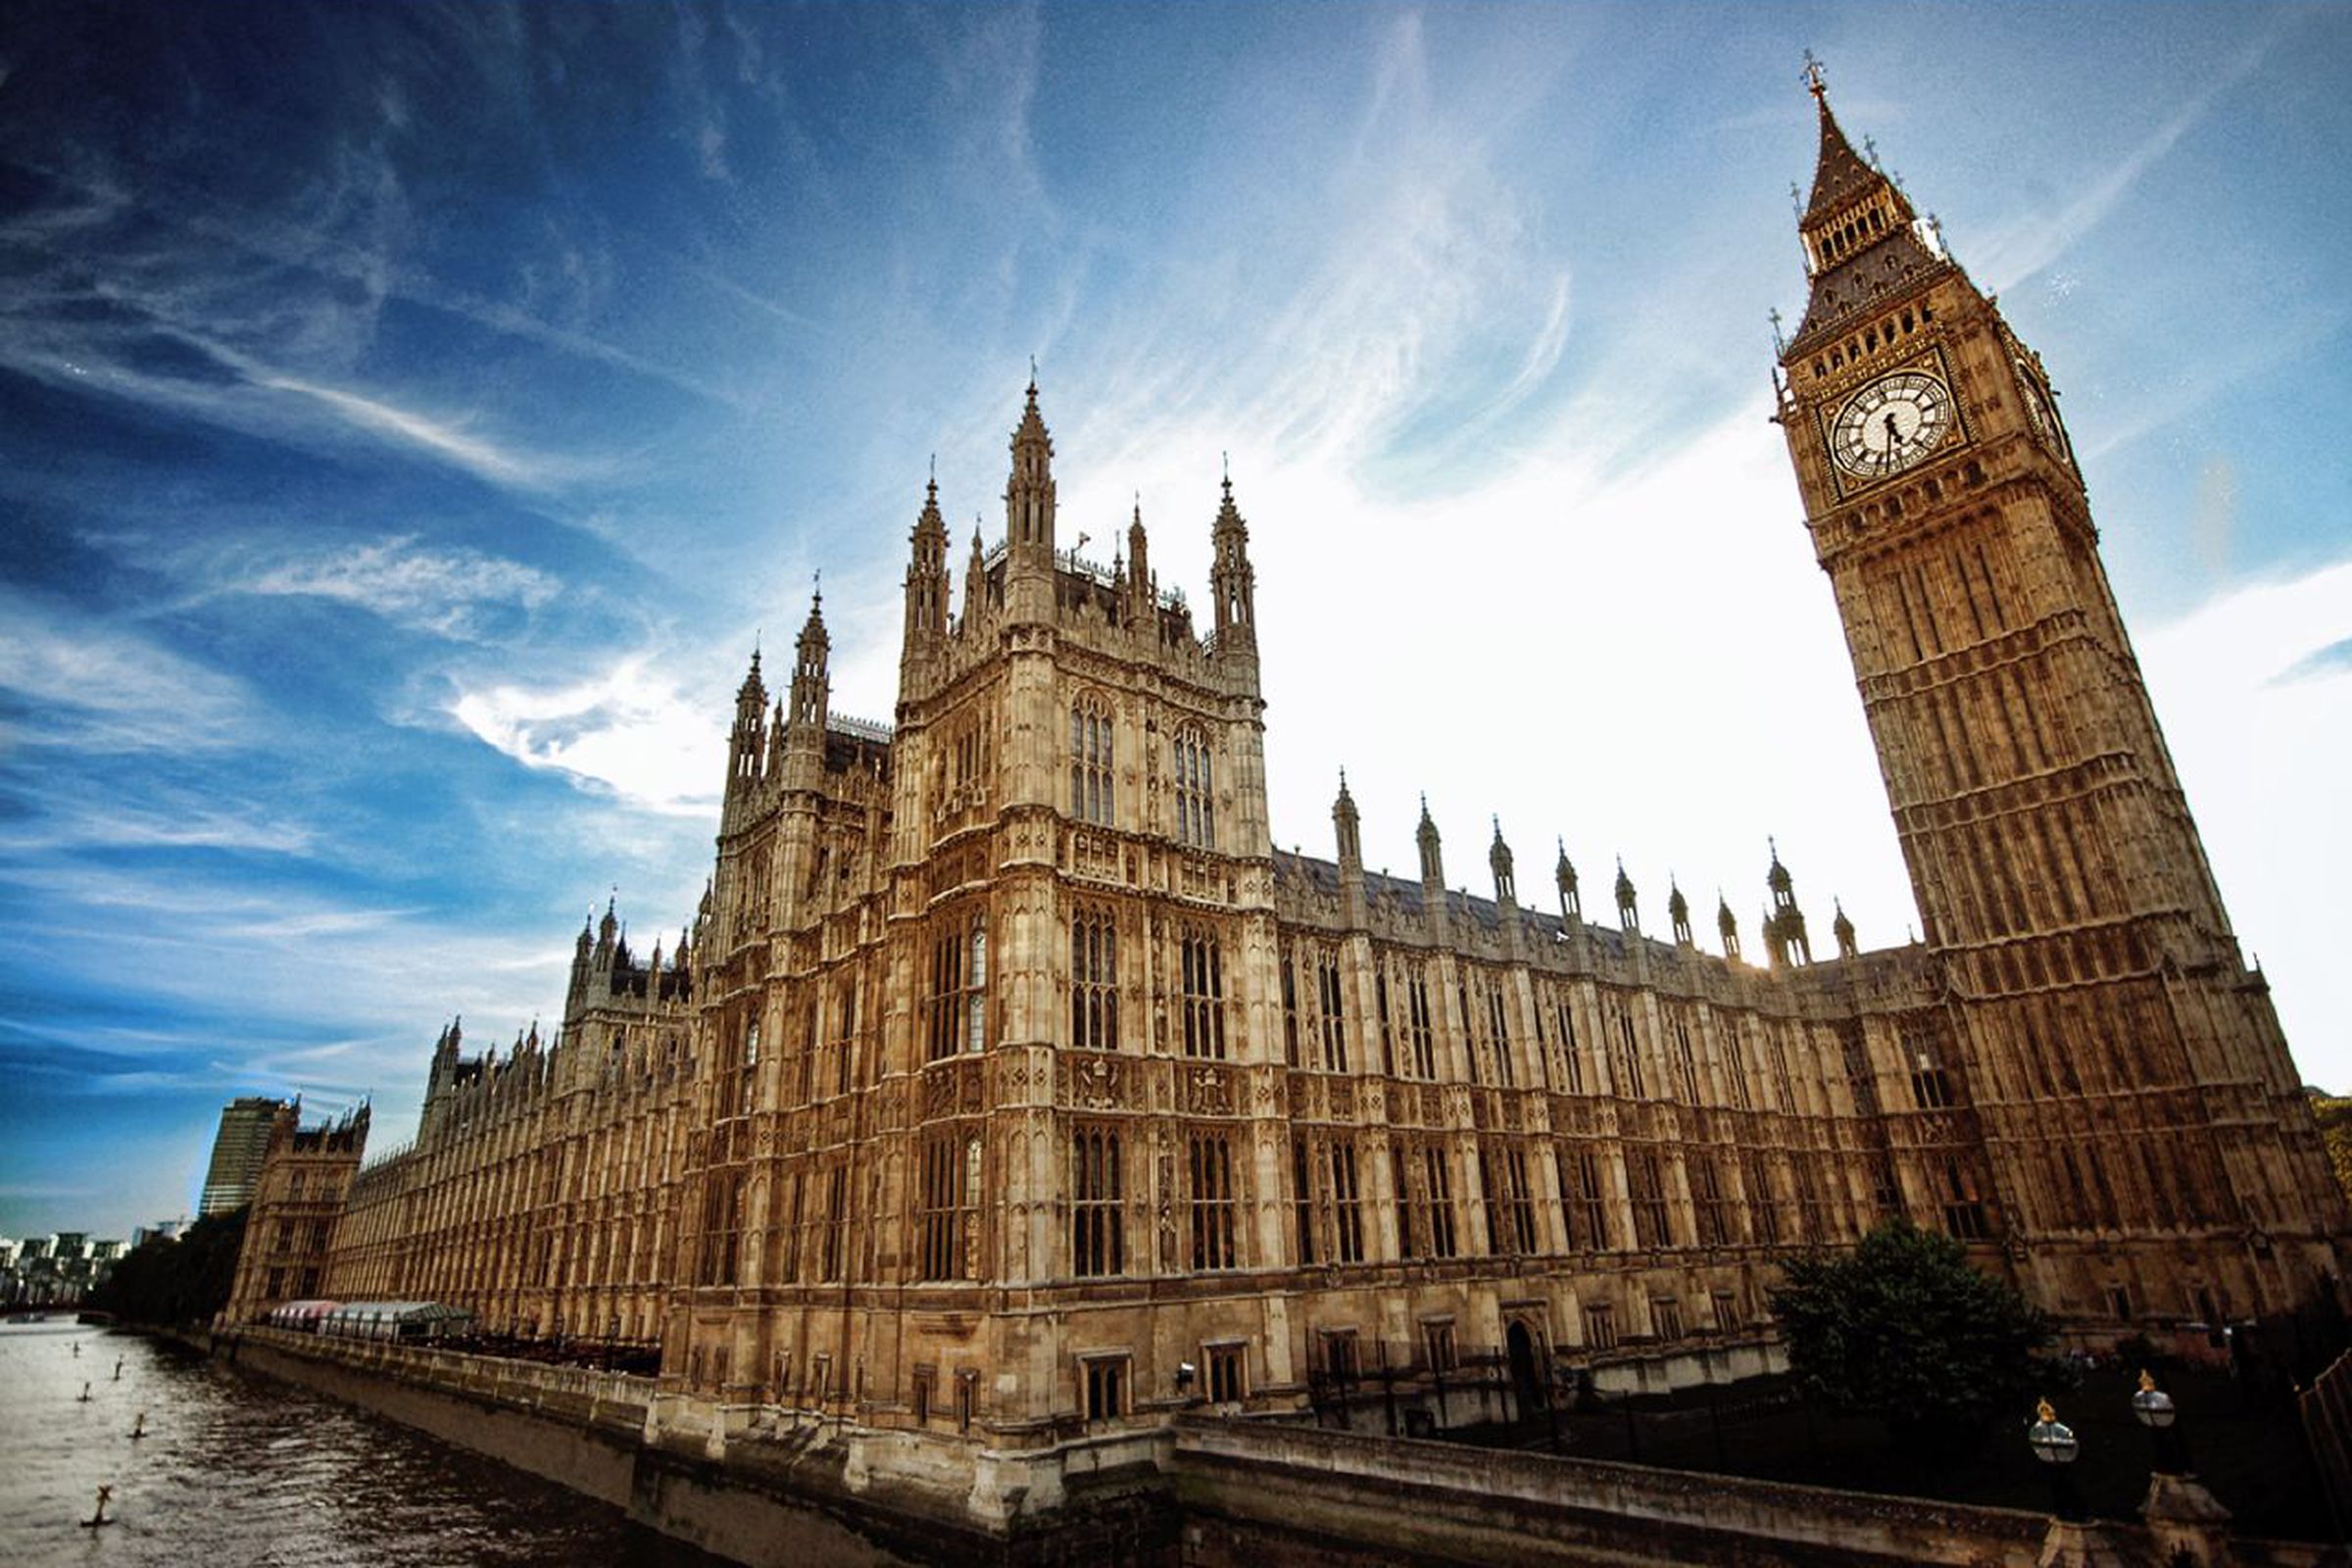 Parliament via Flickr